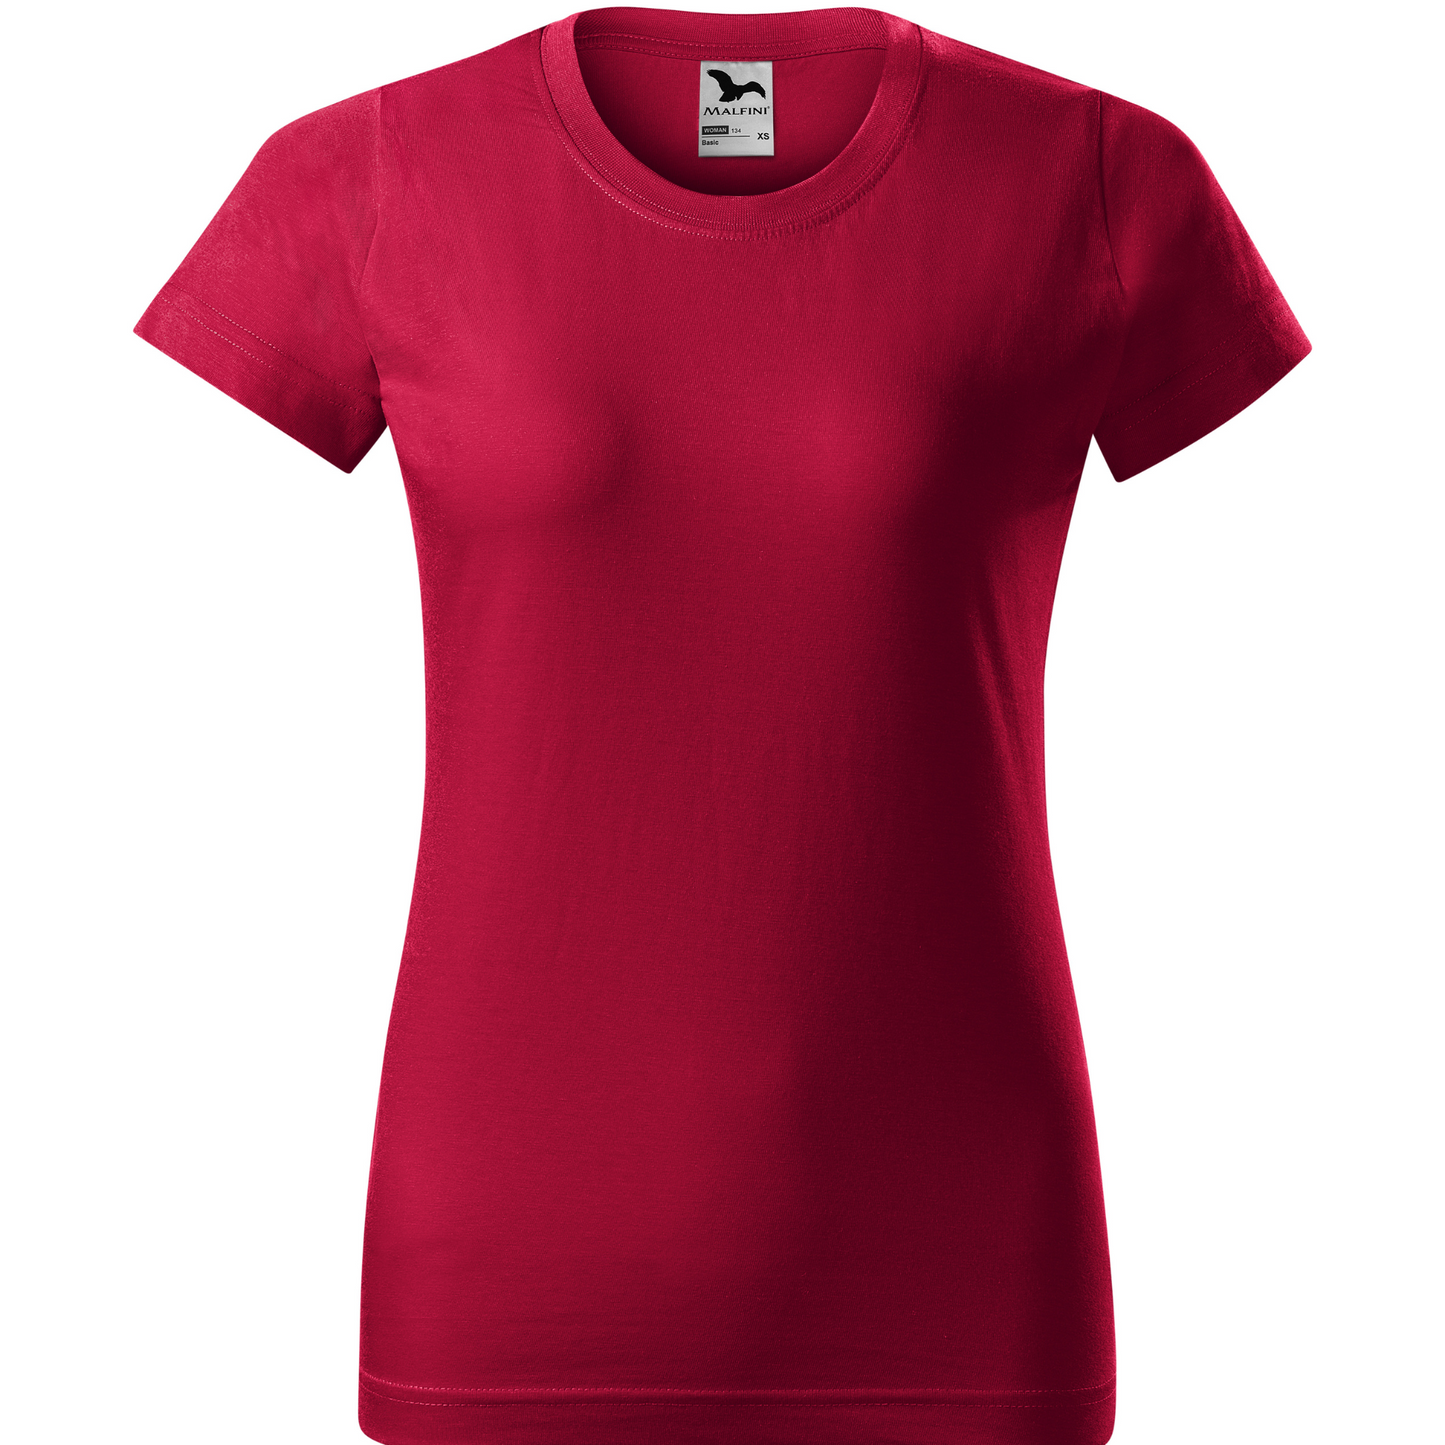 Tricou dama - Variații Rosu